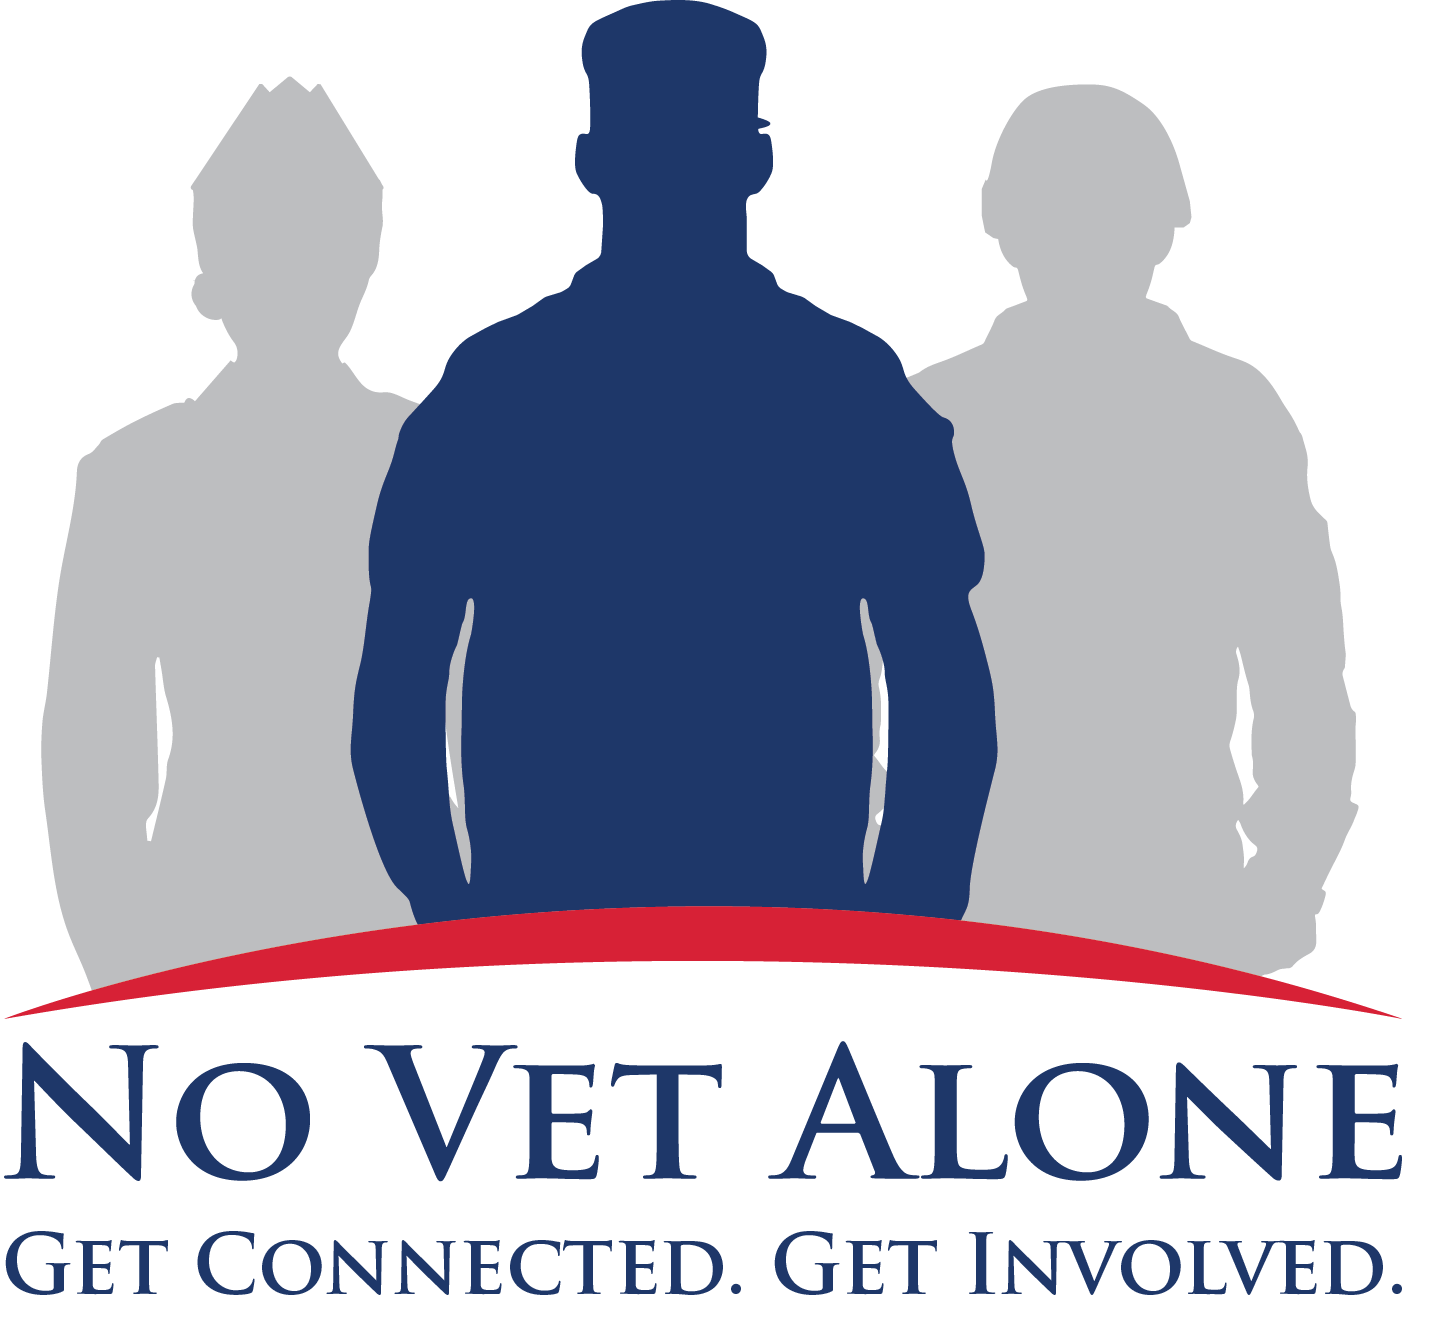 Alone Logo - Resources. No Vet Alone